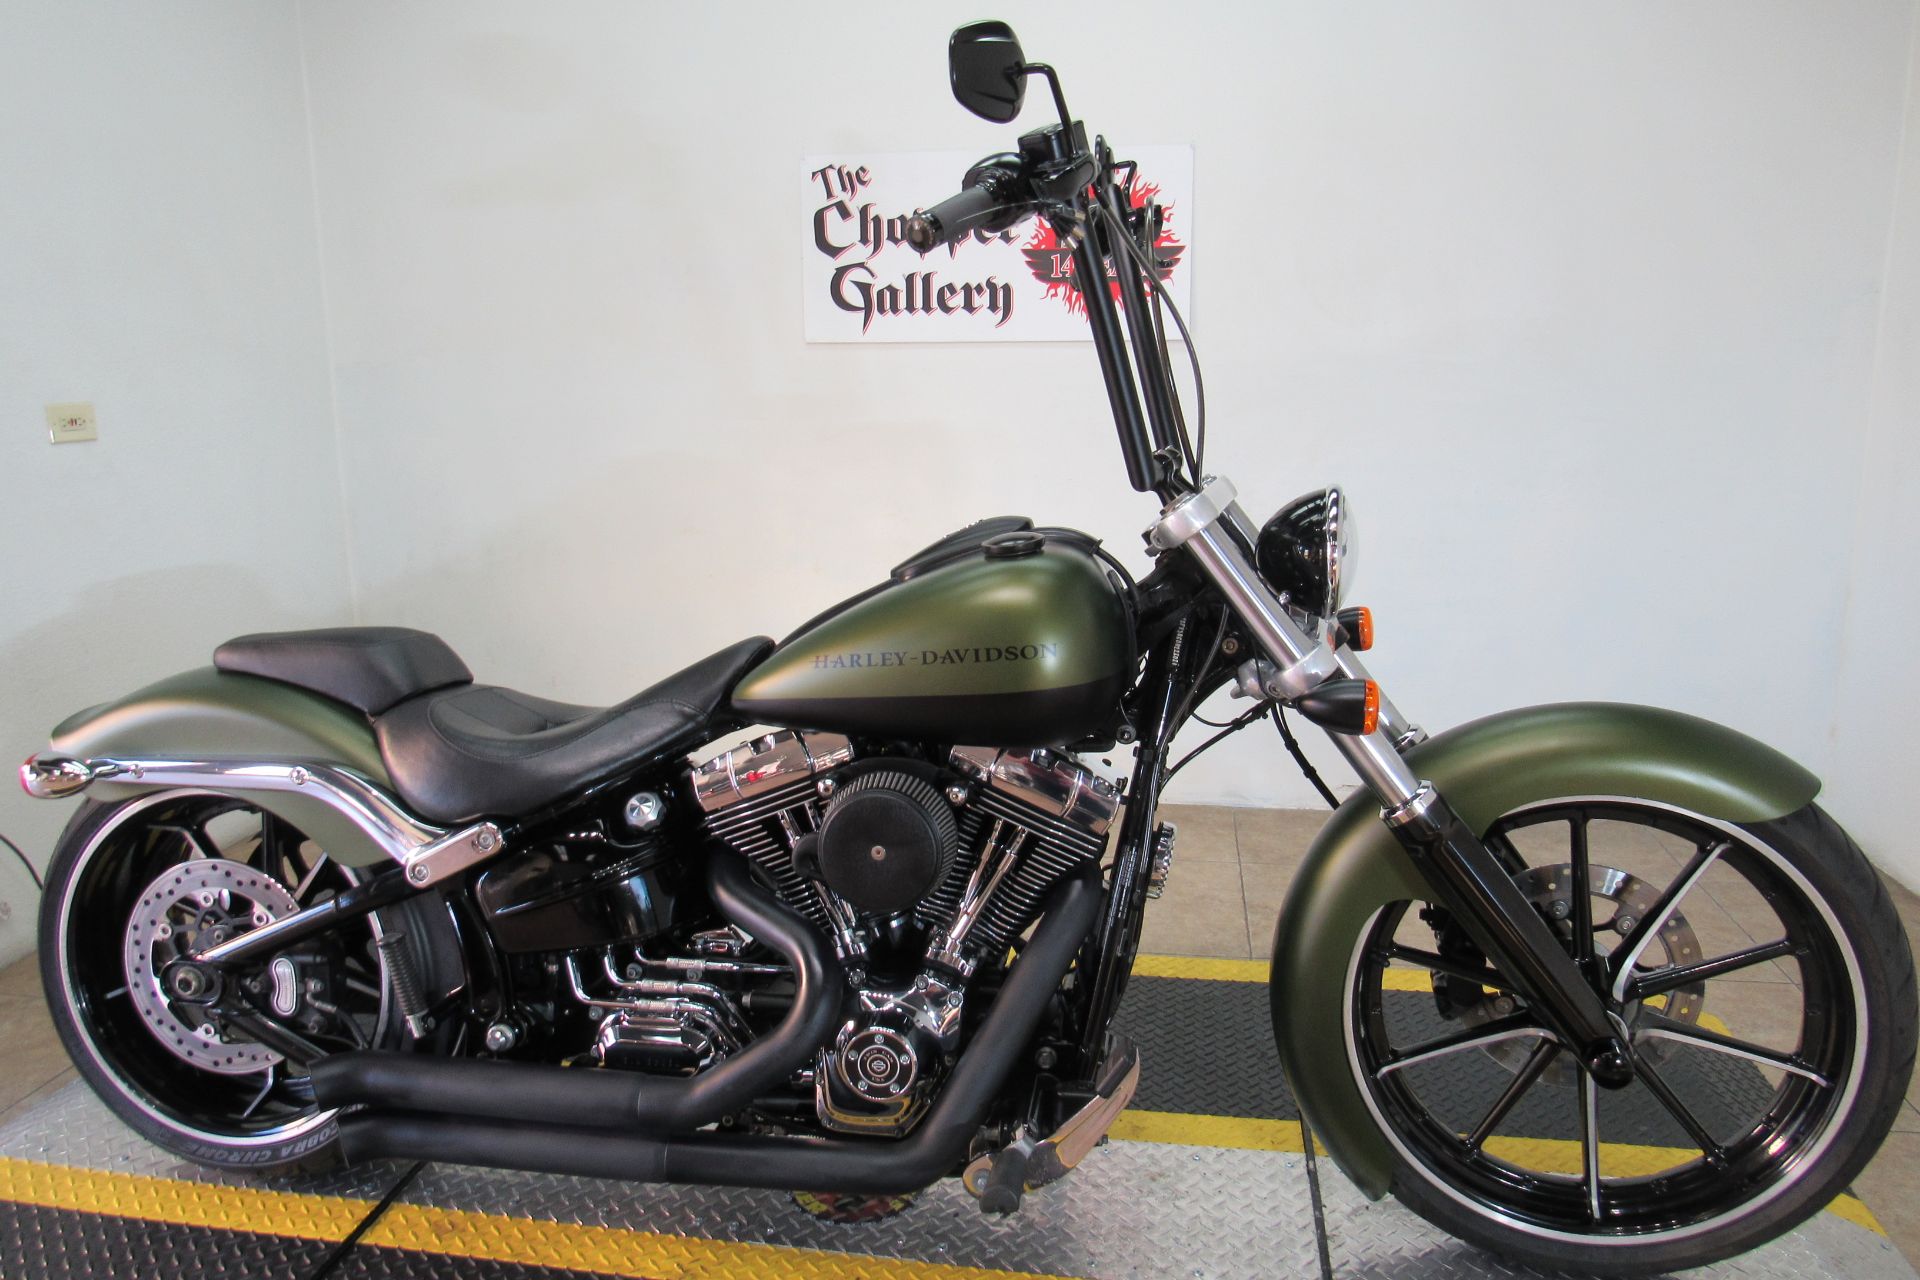 2016 Harley-Davidson Breakout® in Temecula, California - Photo 3